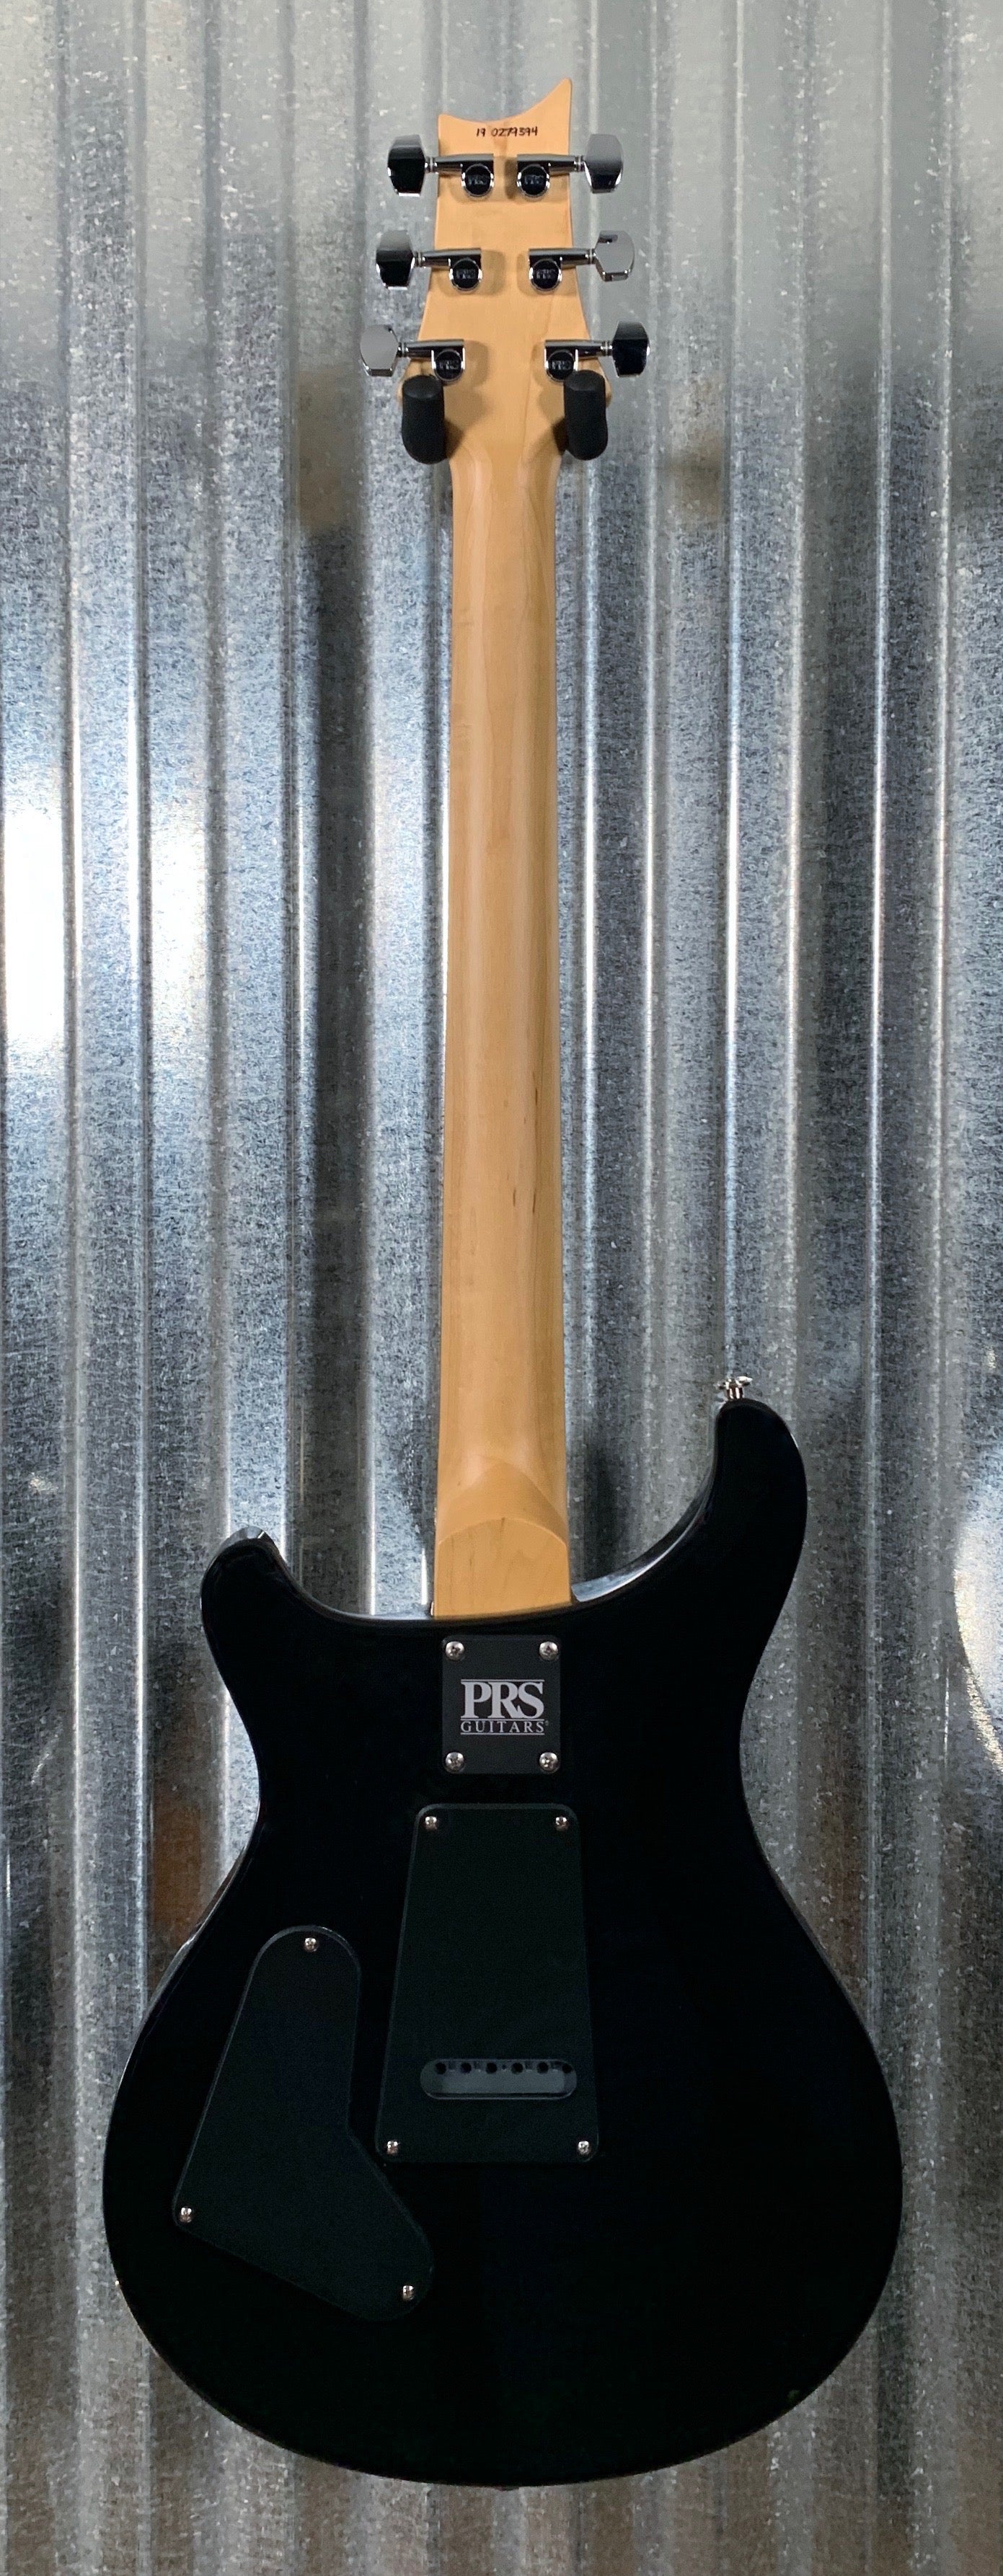 PRS Paul Reed Smith USA CE 24 Amber Smokewrap Burst Guitar & Bag 2019 #9394